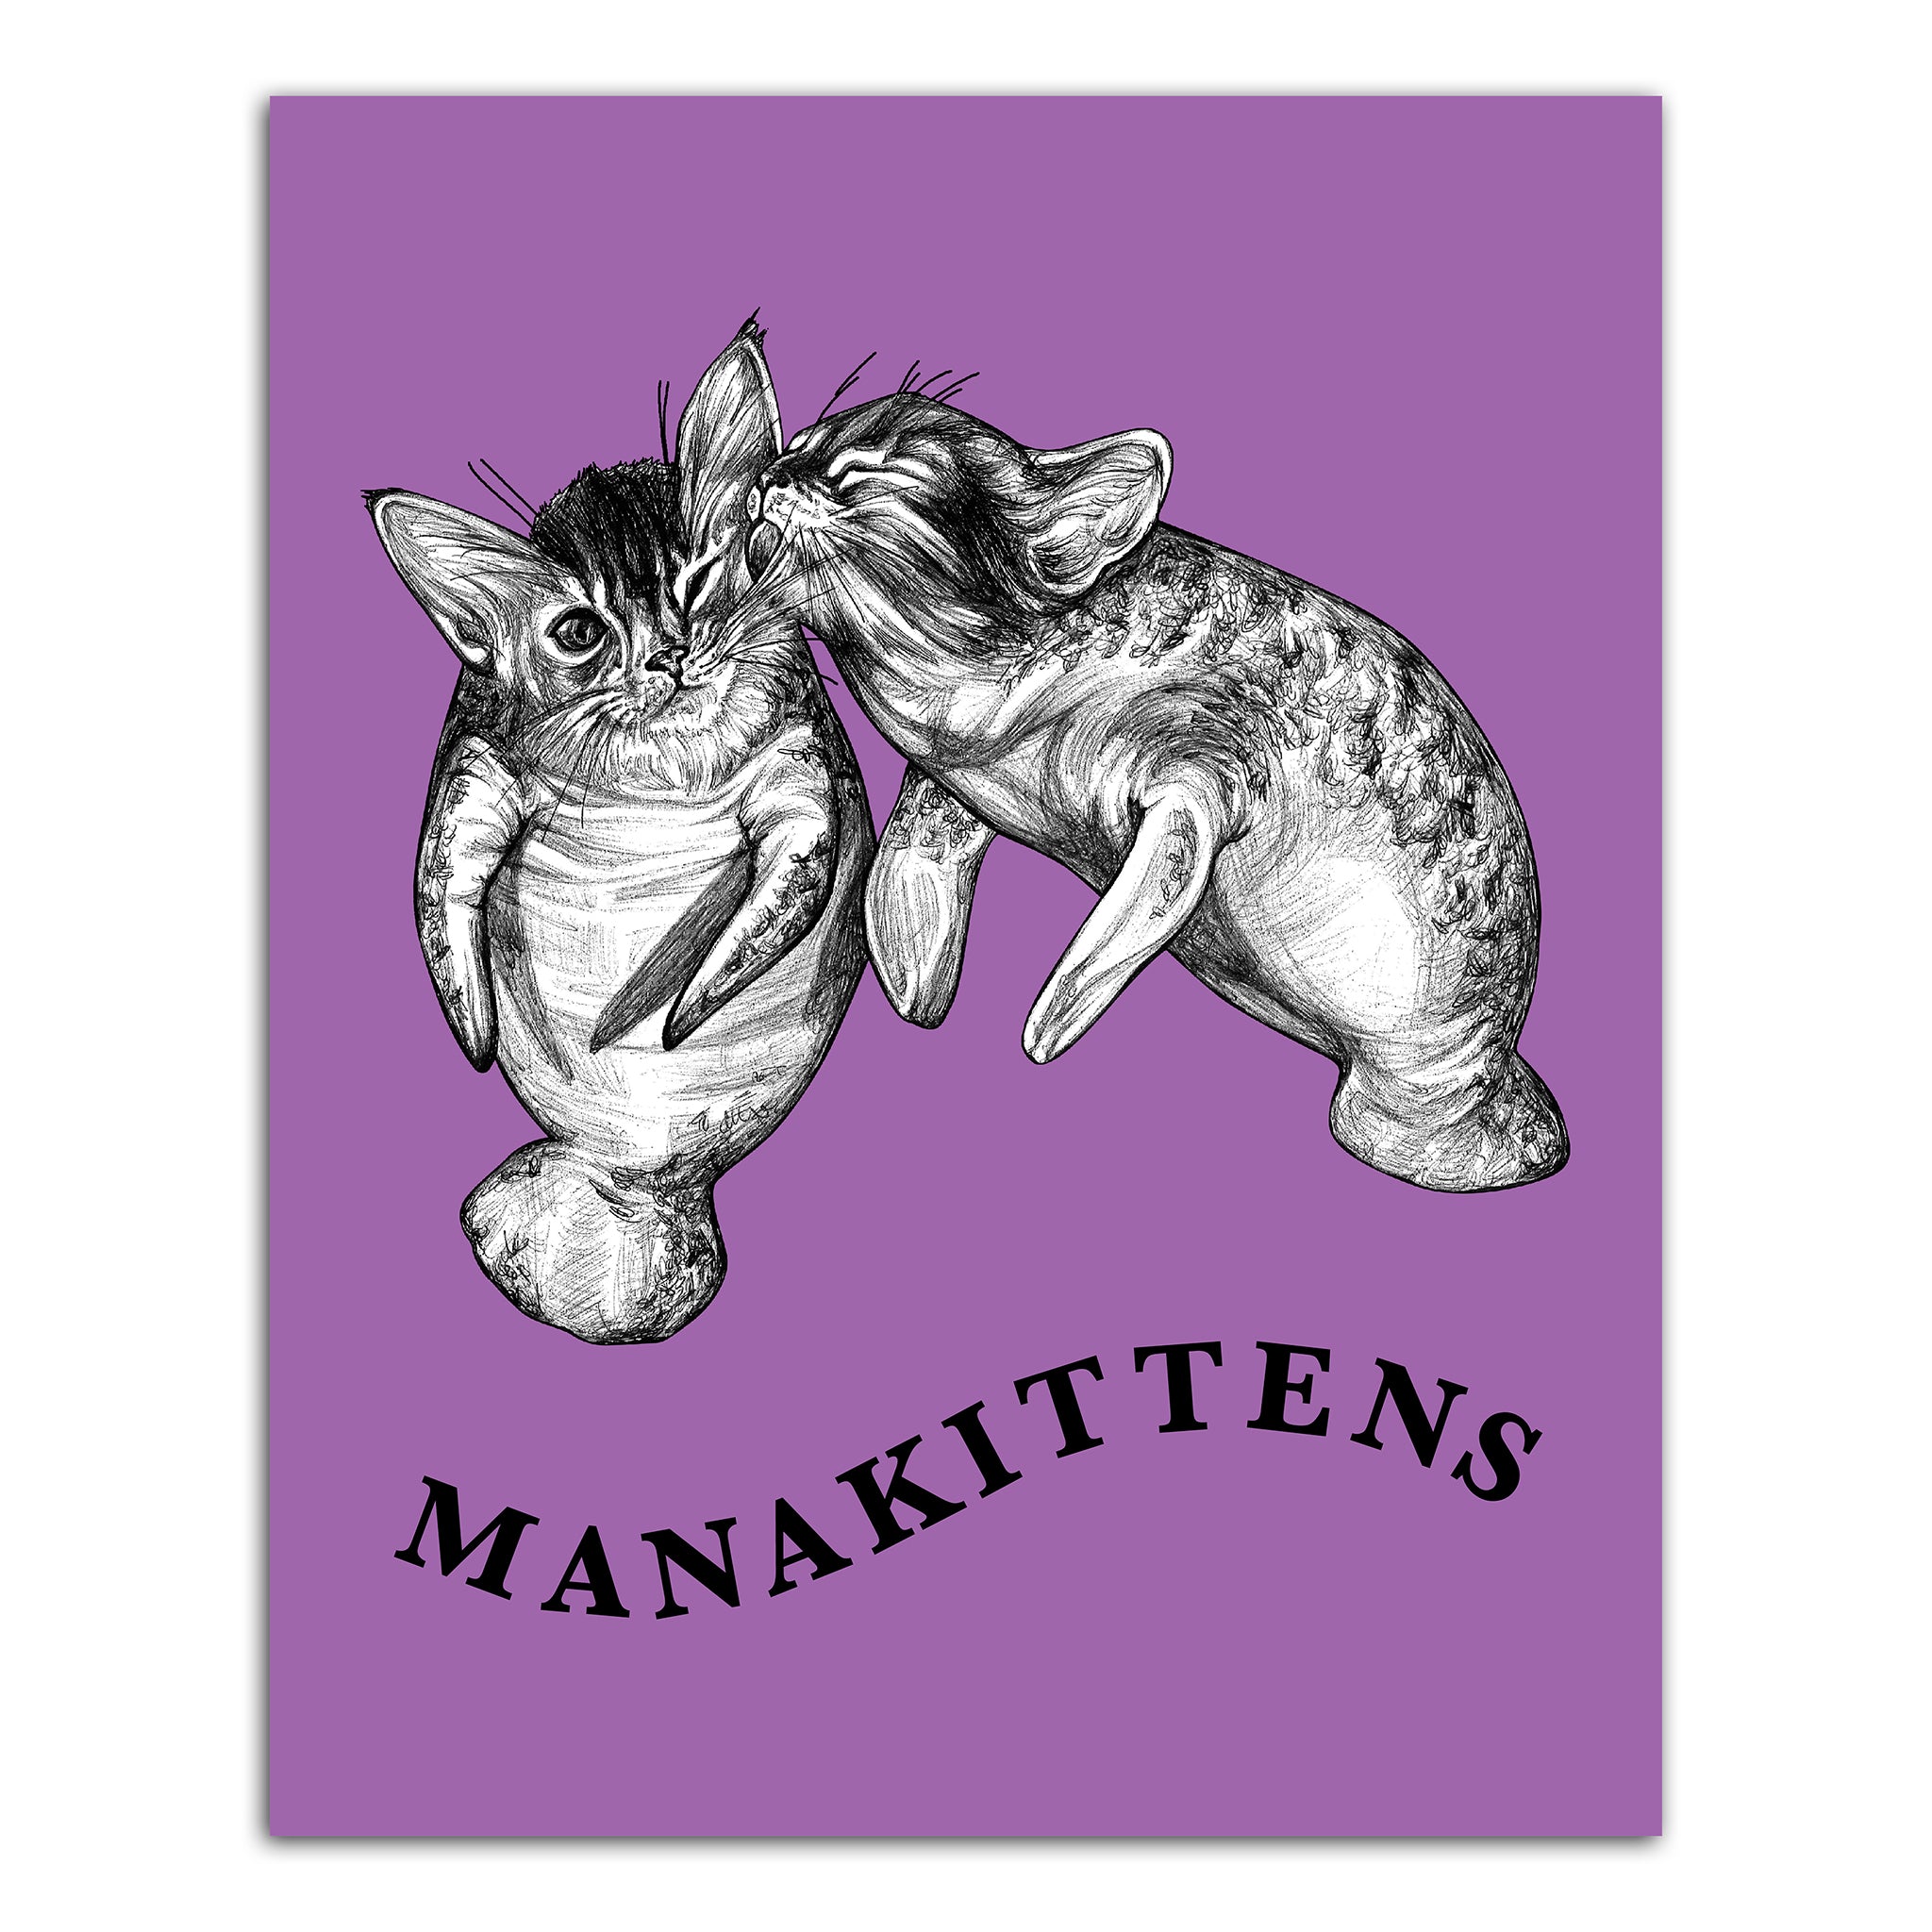 Manakittens | Manatee + Kitten Hybrid Animal | 8x10" Color Print